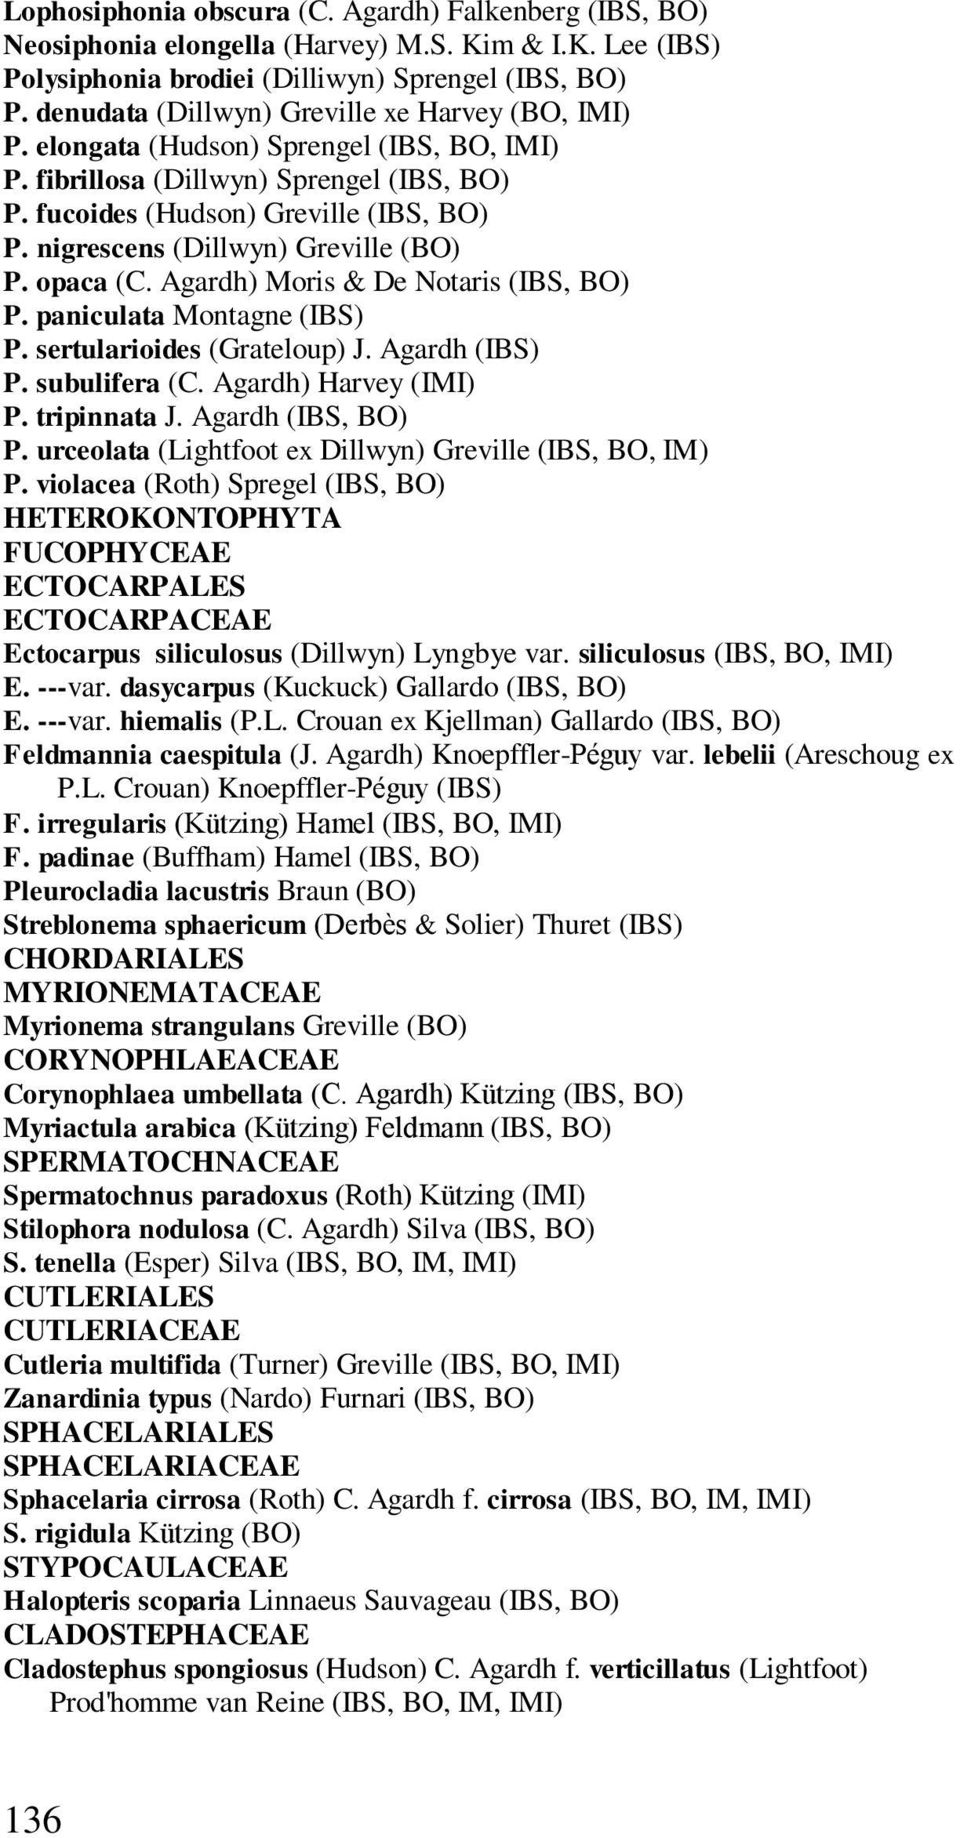 nigrescens (Dillwyn) Greville (BO) P. opaca (C. Agardh) Moris & De Notaris (IBS, BO) P. paniculata Montagne (IBS) P. sertularioides (Grateloup) J. Agardh (IBS) P. subulifera (C.